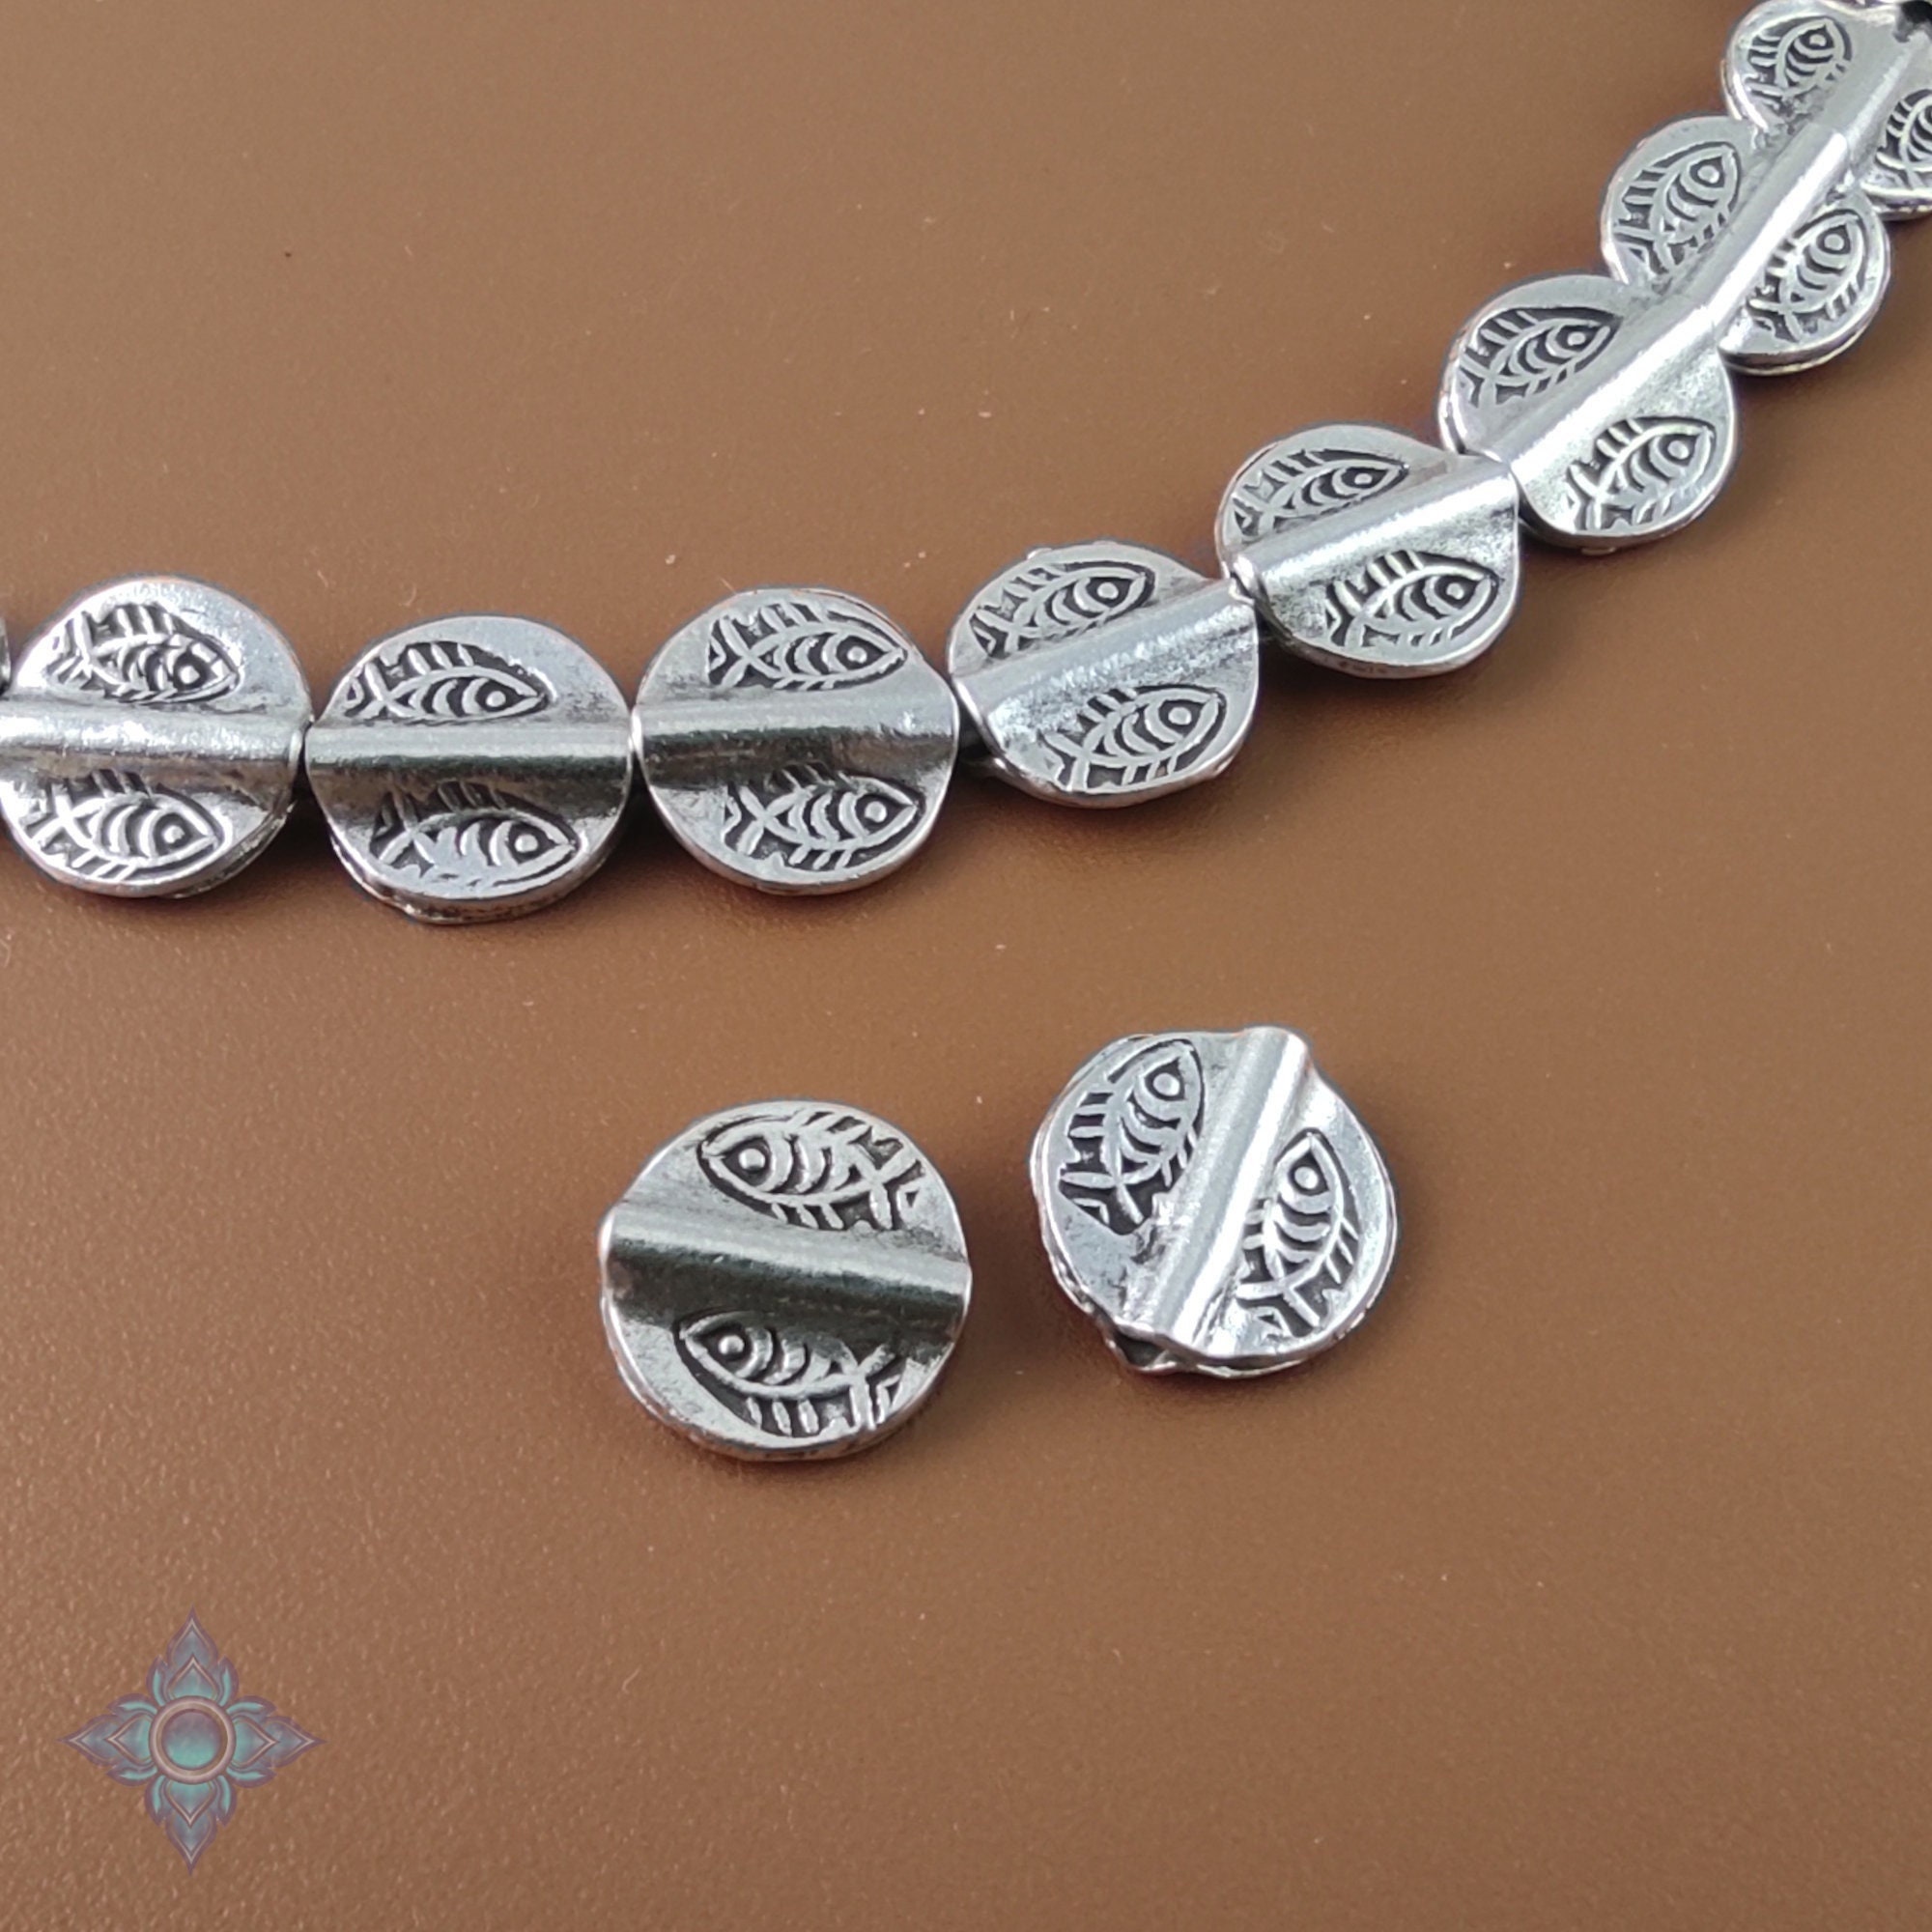 10 Karen Hill-Tribe Silver Beads, 97% Silver Content, Handmade